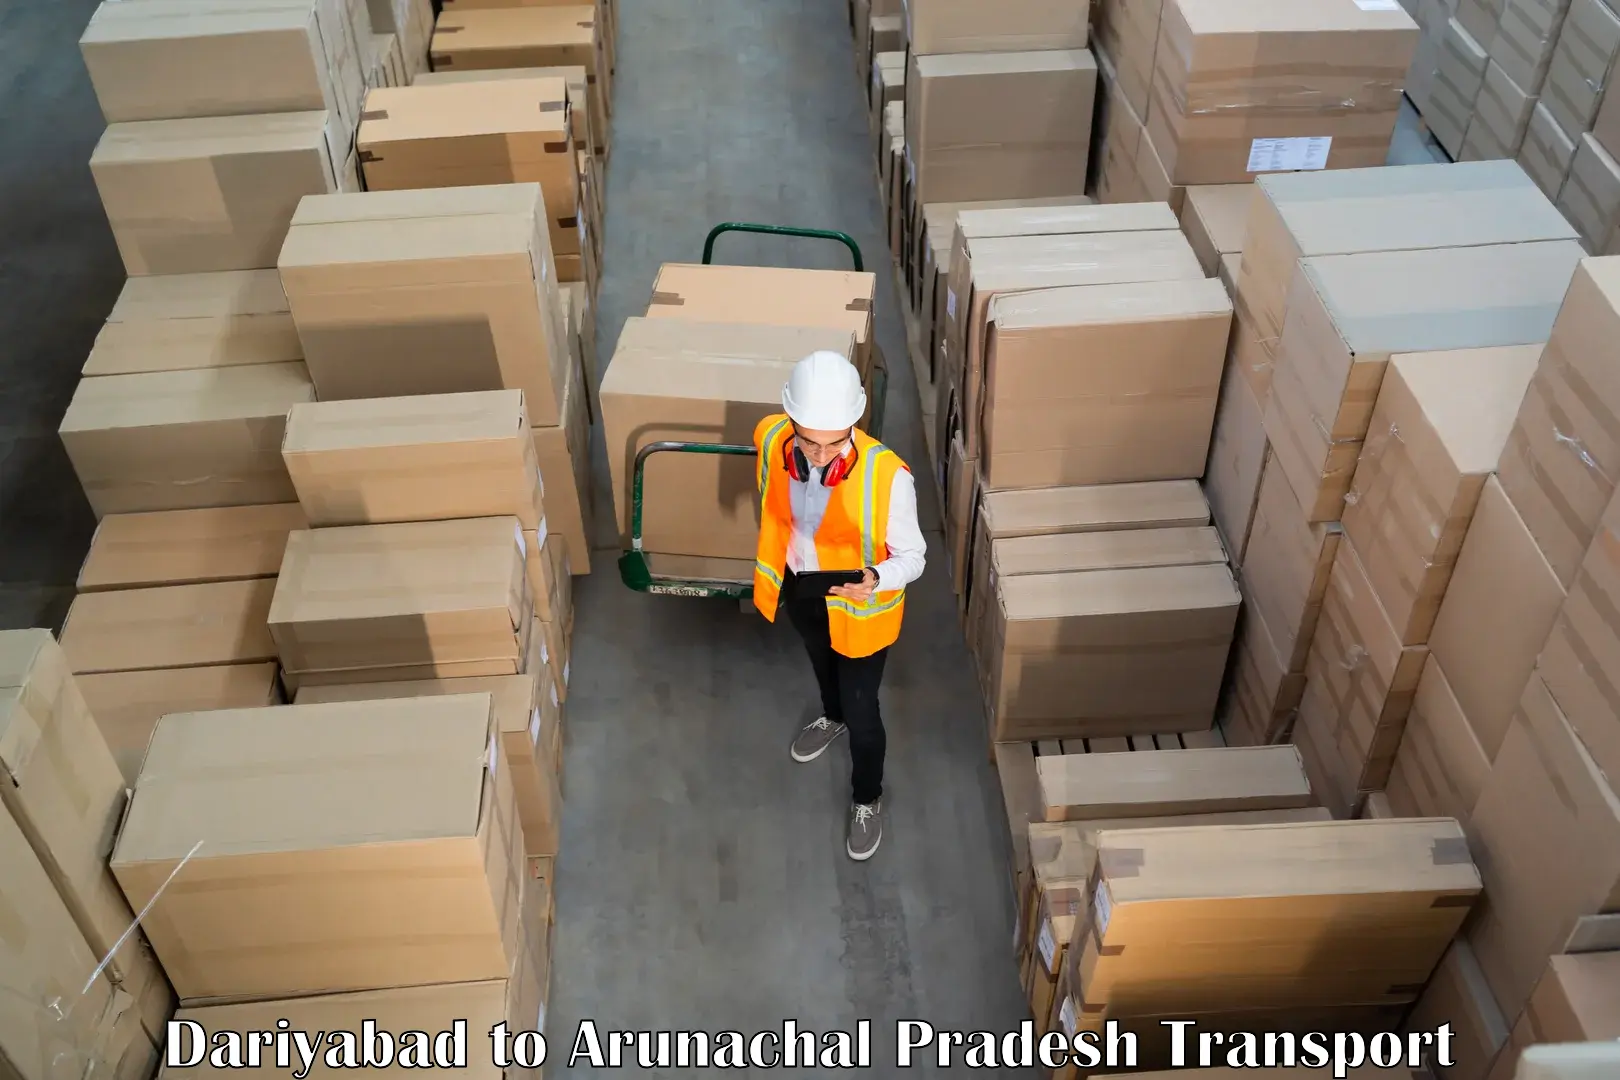 Truck transport companies in India Dariyabad to Nirjuli